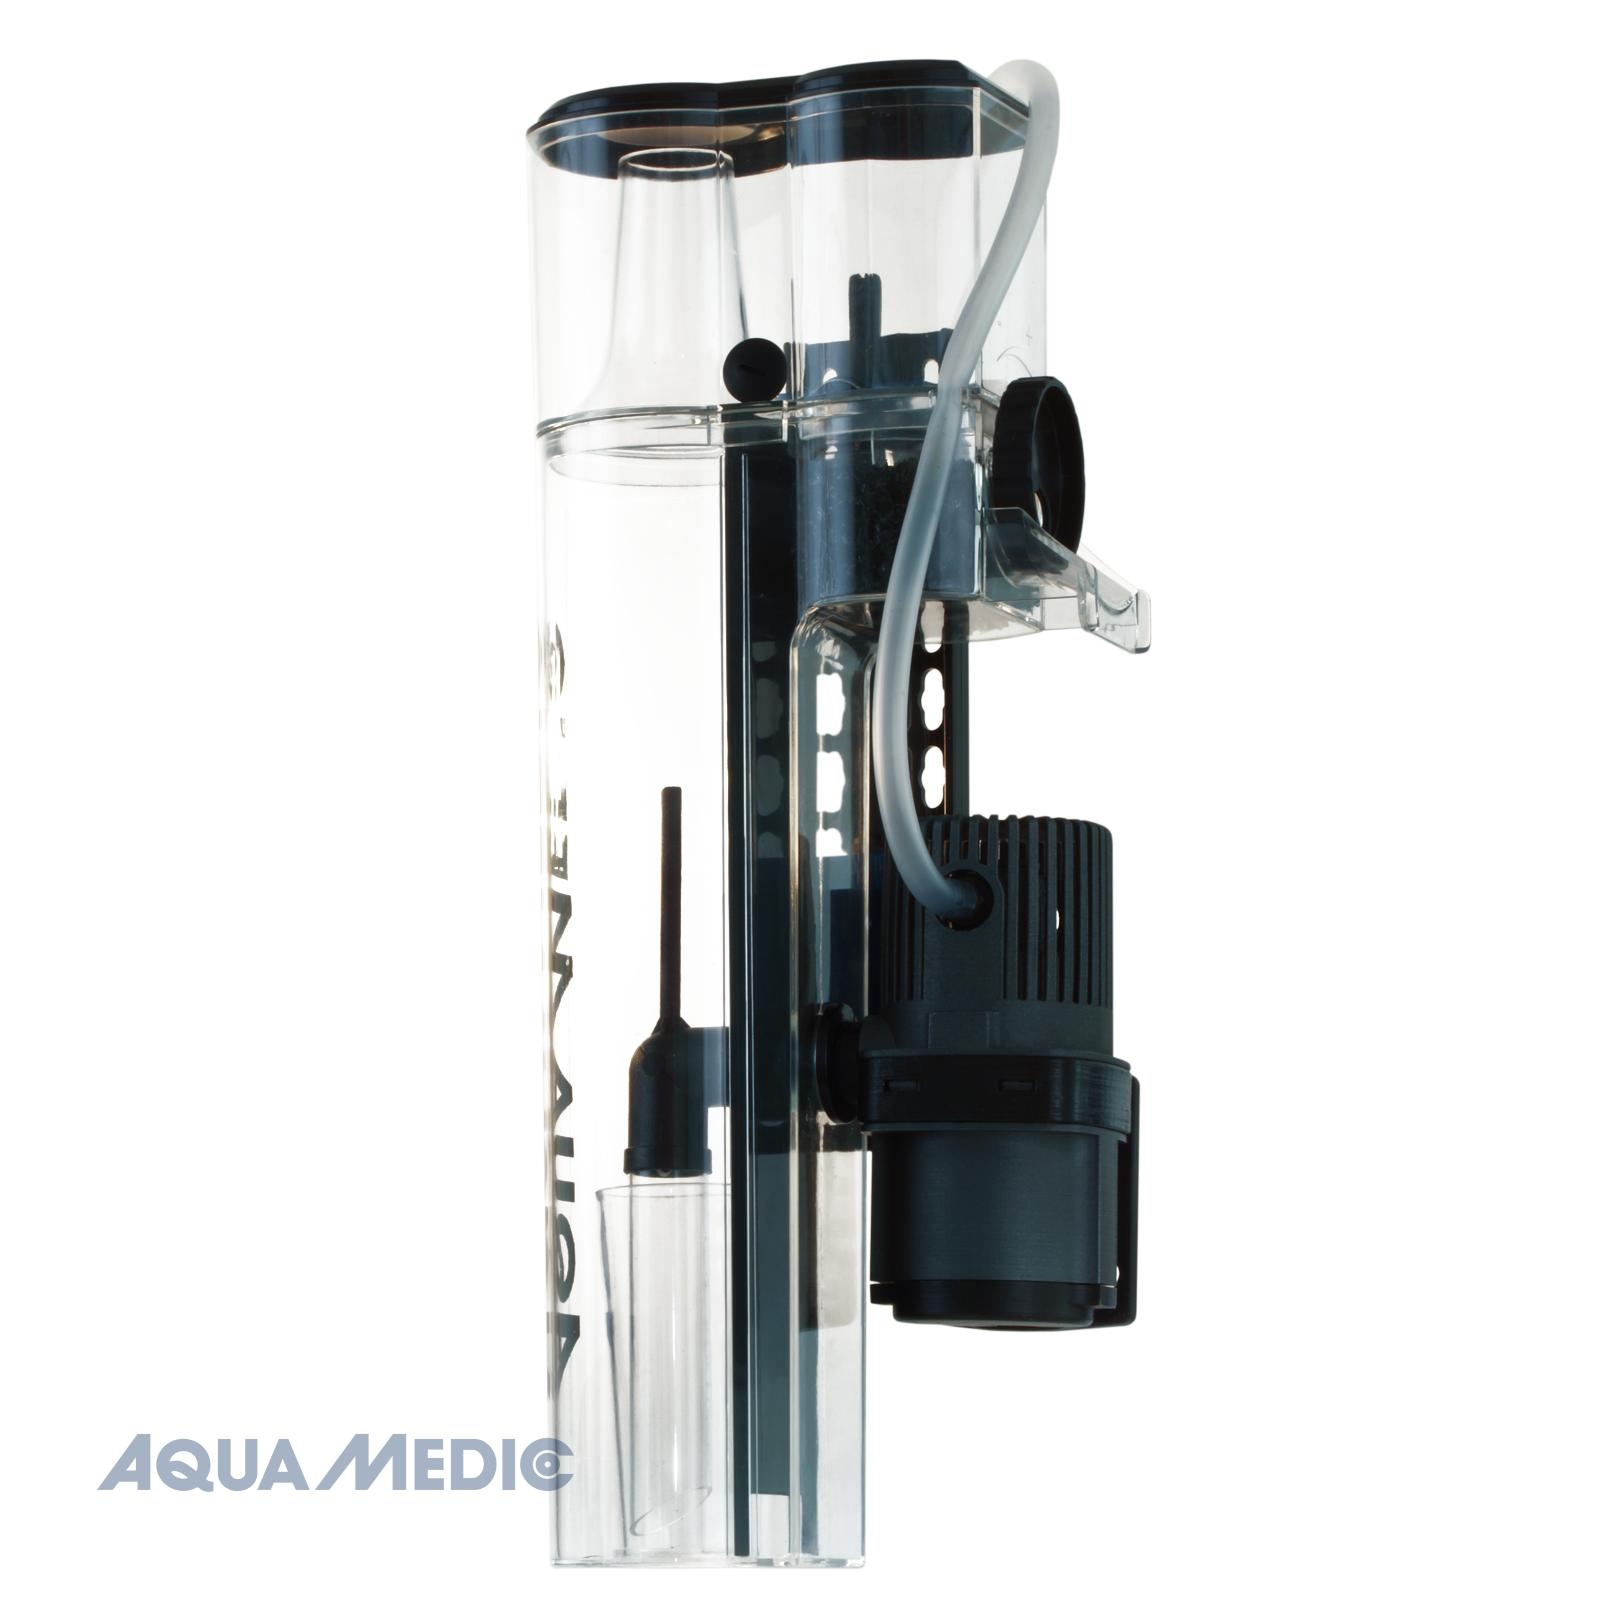 Aqua Medic Aquarium - Cubicus CF Qube 